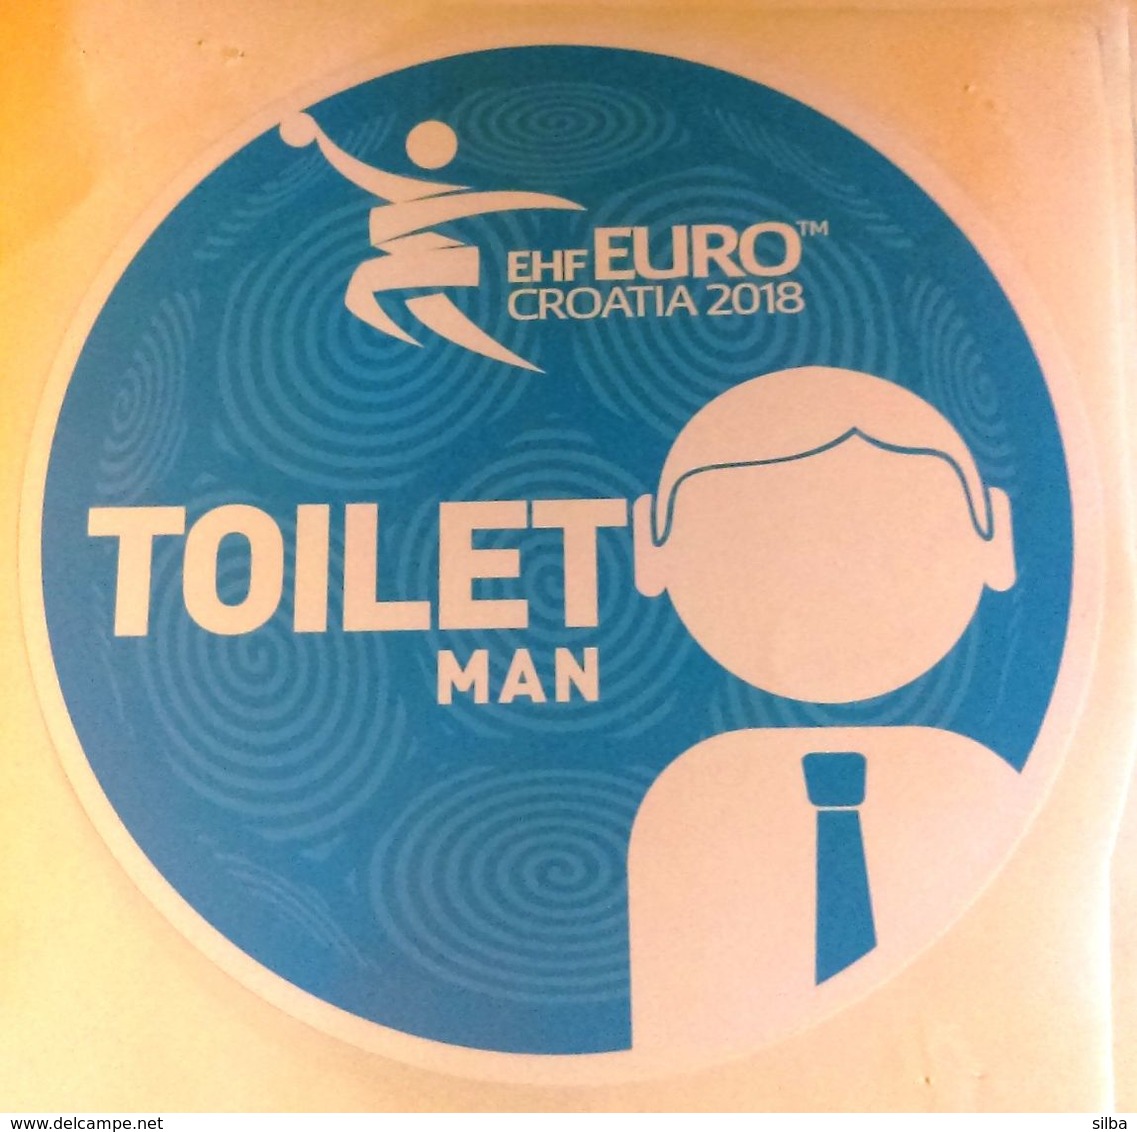 HANDBALL / MEN'S EHF EURO CROATIA 2018 / Main Official Sticker / TOILET MAN - Handball